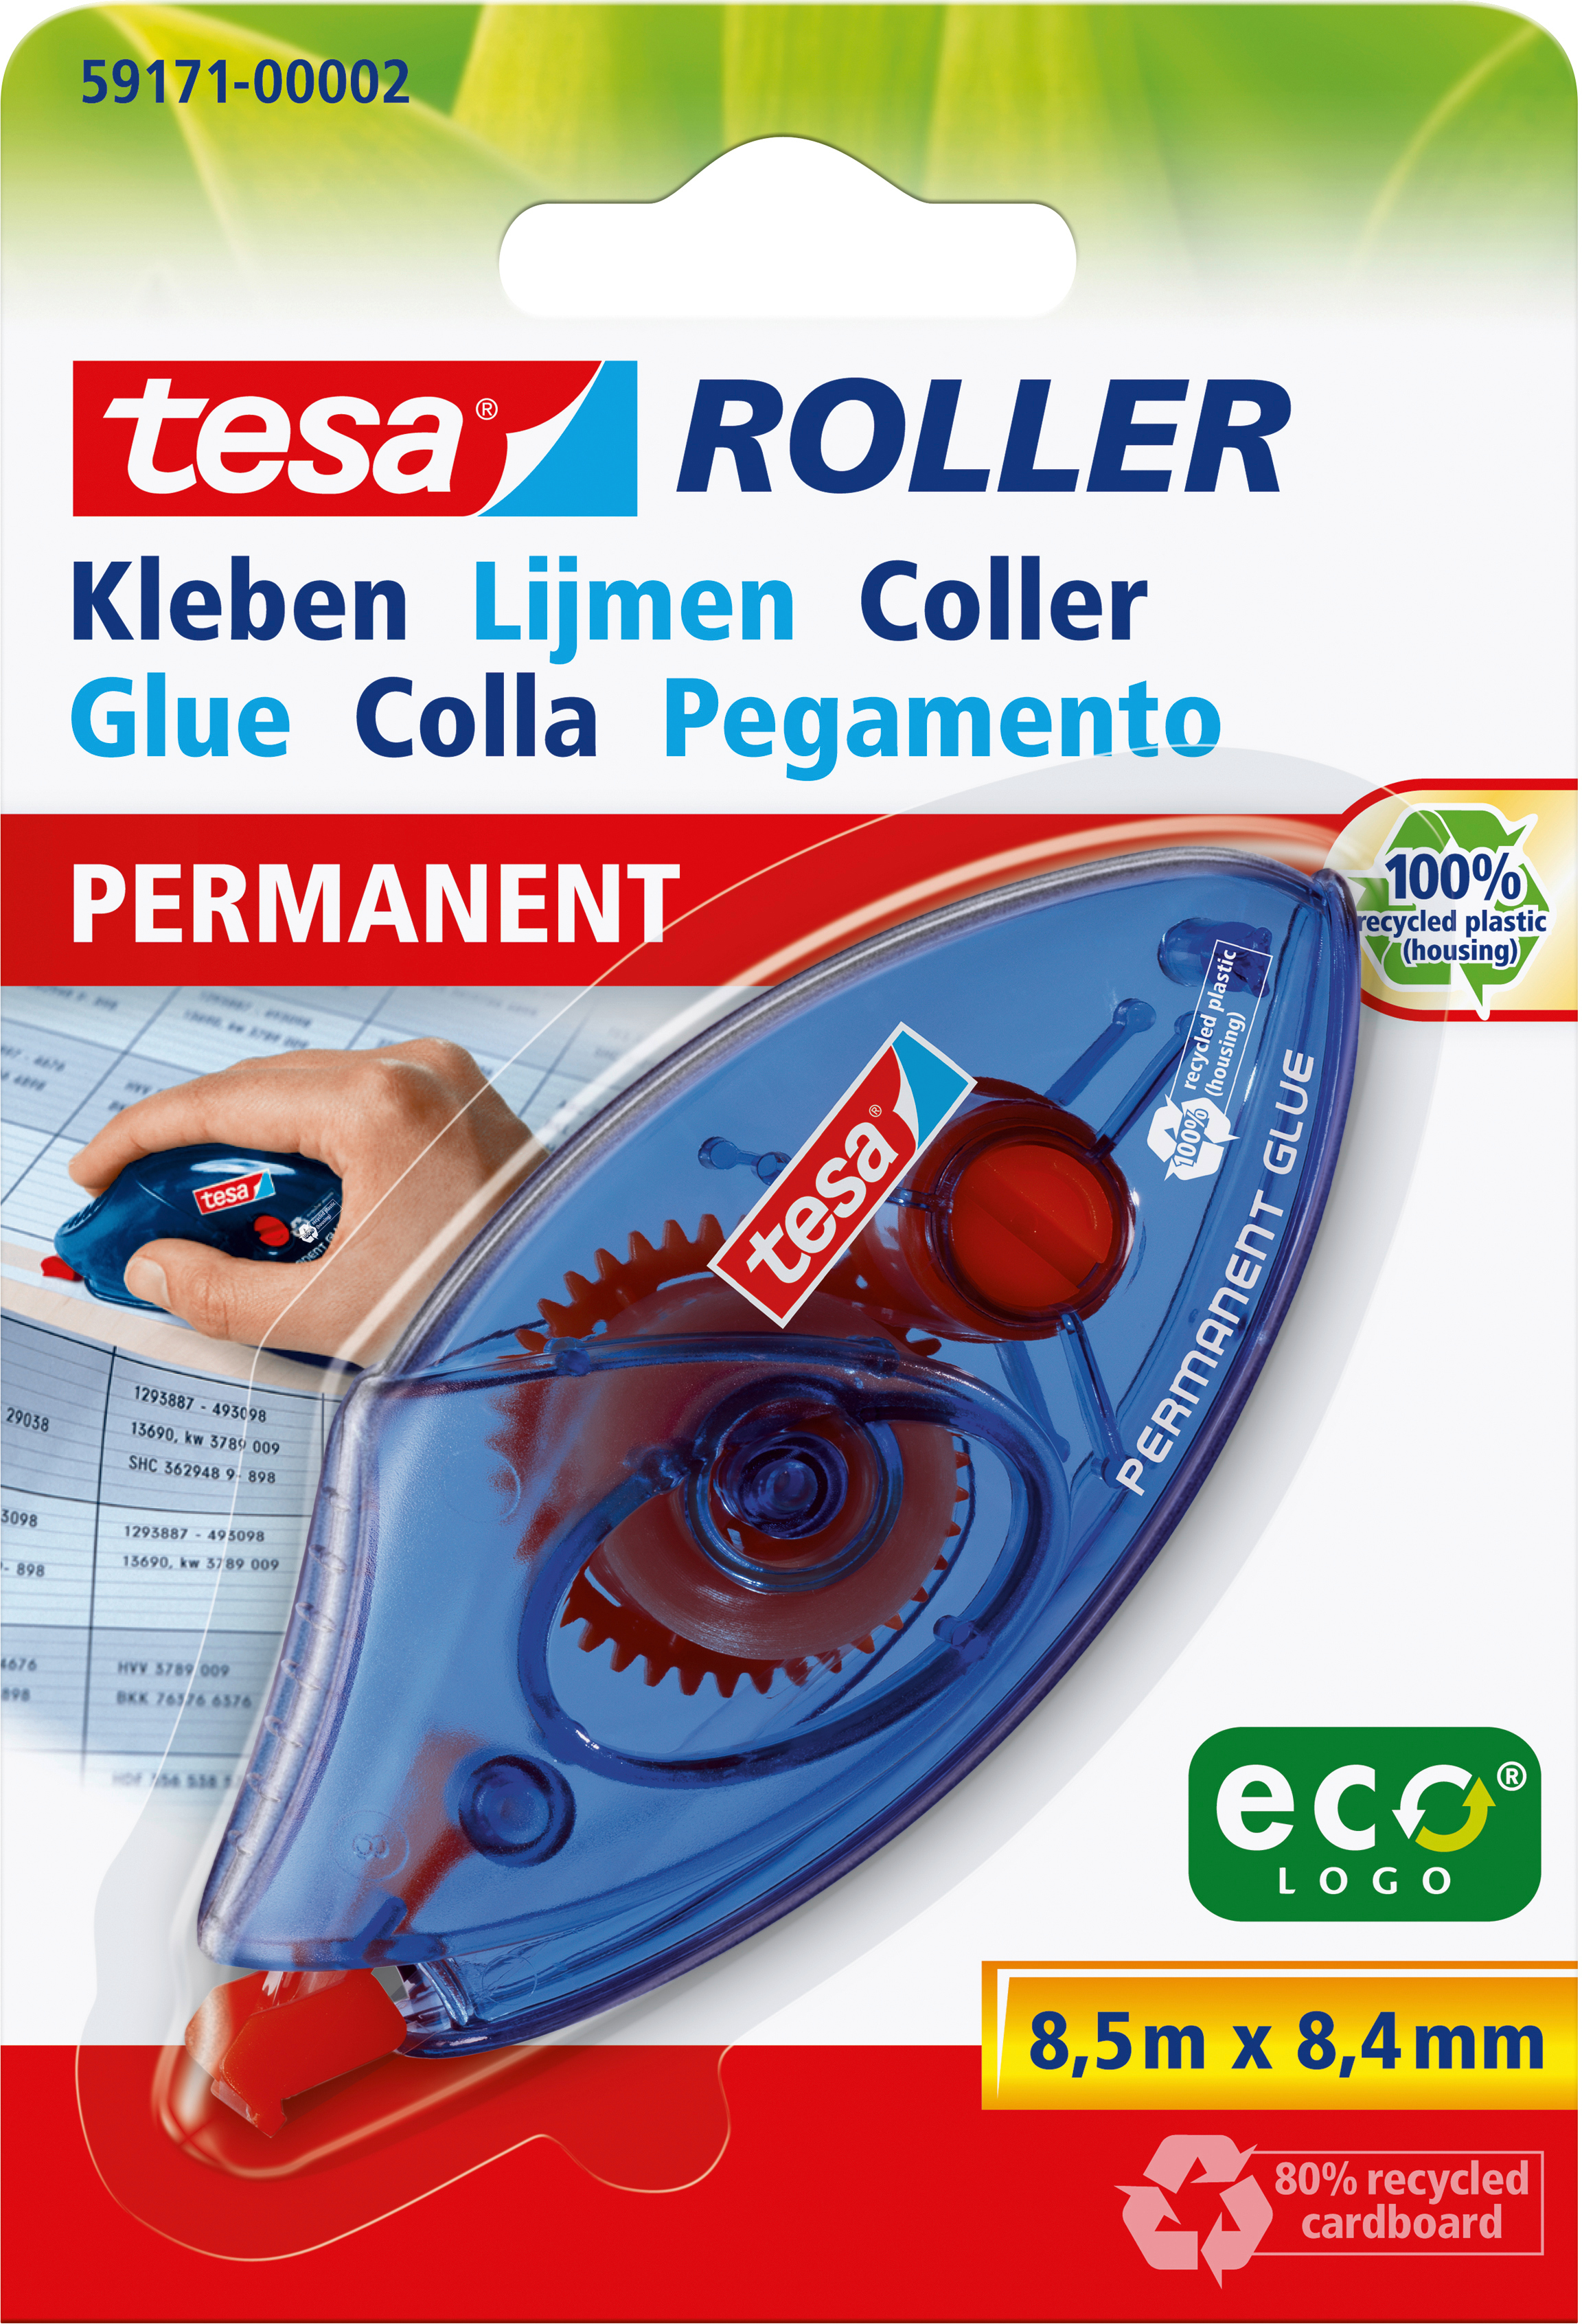 TESA Roller de colle 591710000 8,4mmx8,5m permanent